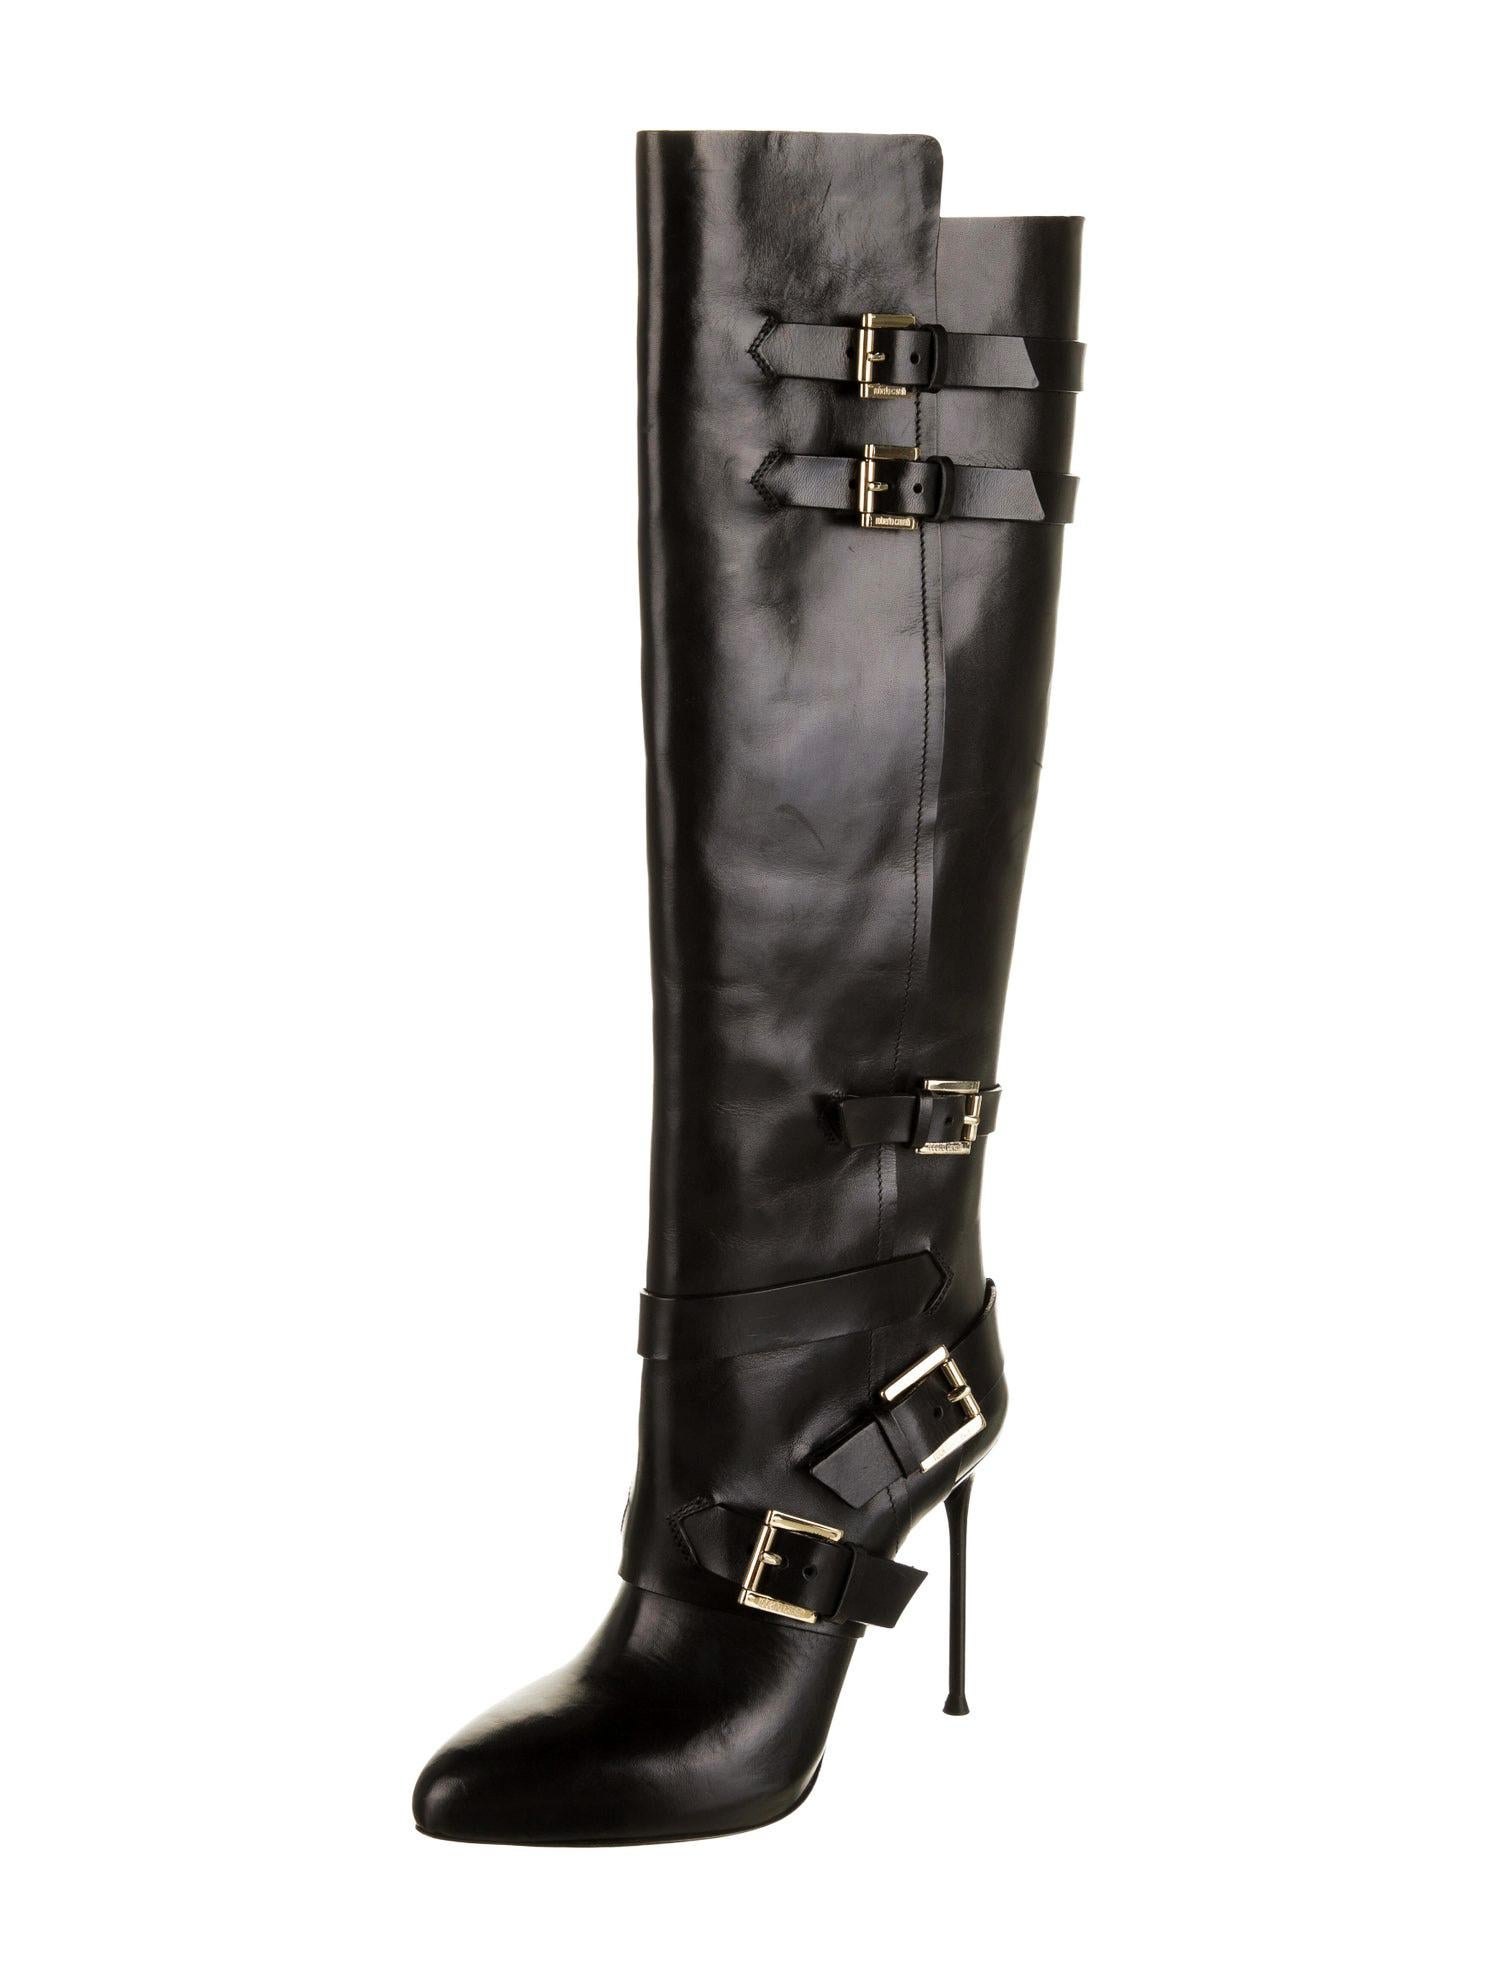 New Roberto Cavalli Buckle Stiletto Heel Black Leather Platform Boots 37 - US 7 For Sale 1